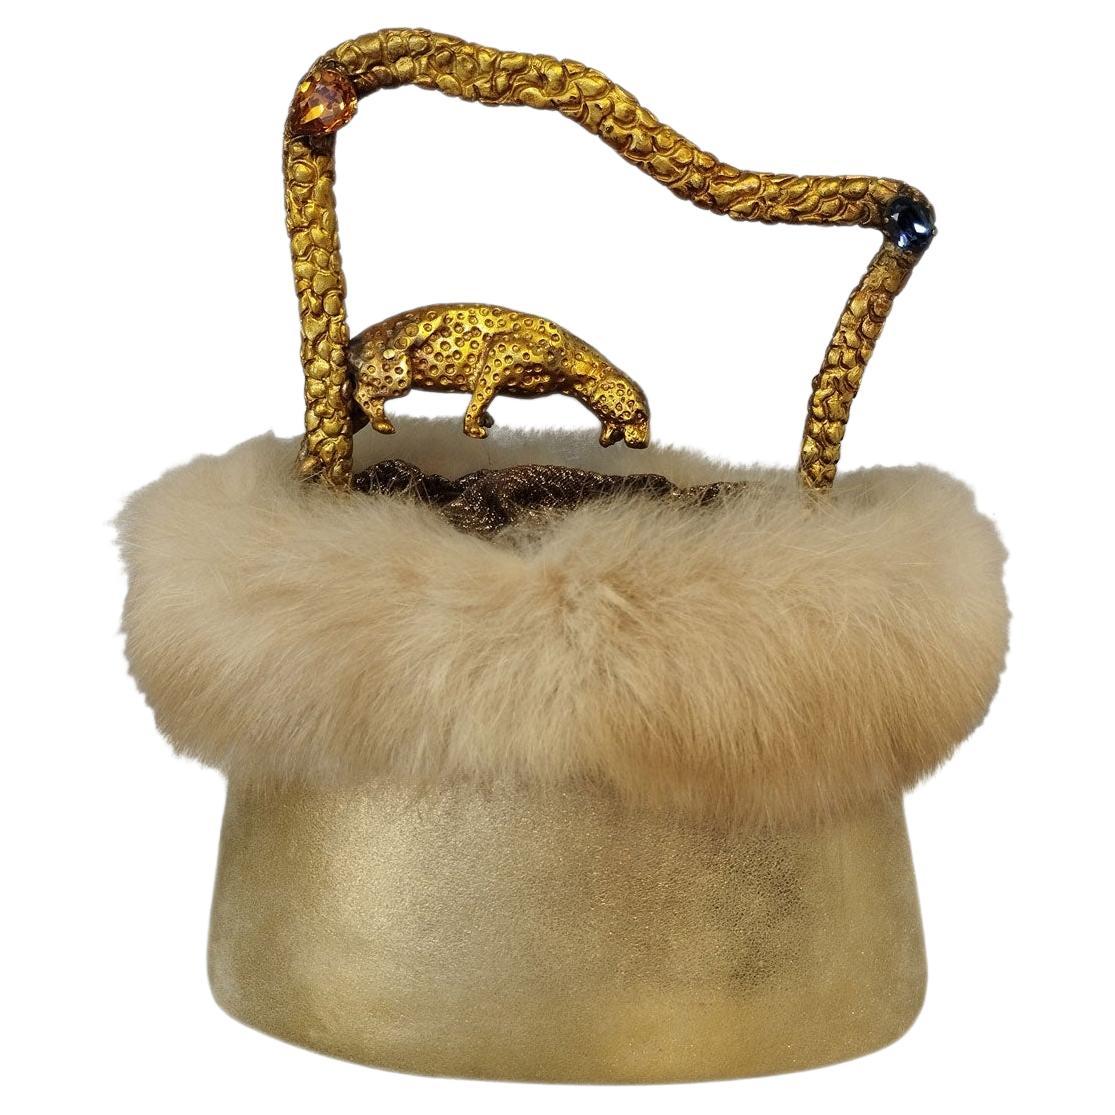 Roberta Balsamo World's Unique Jewel bag For Sale